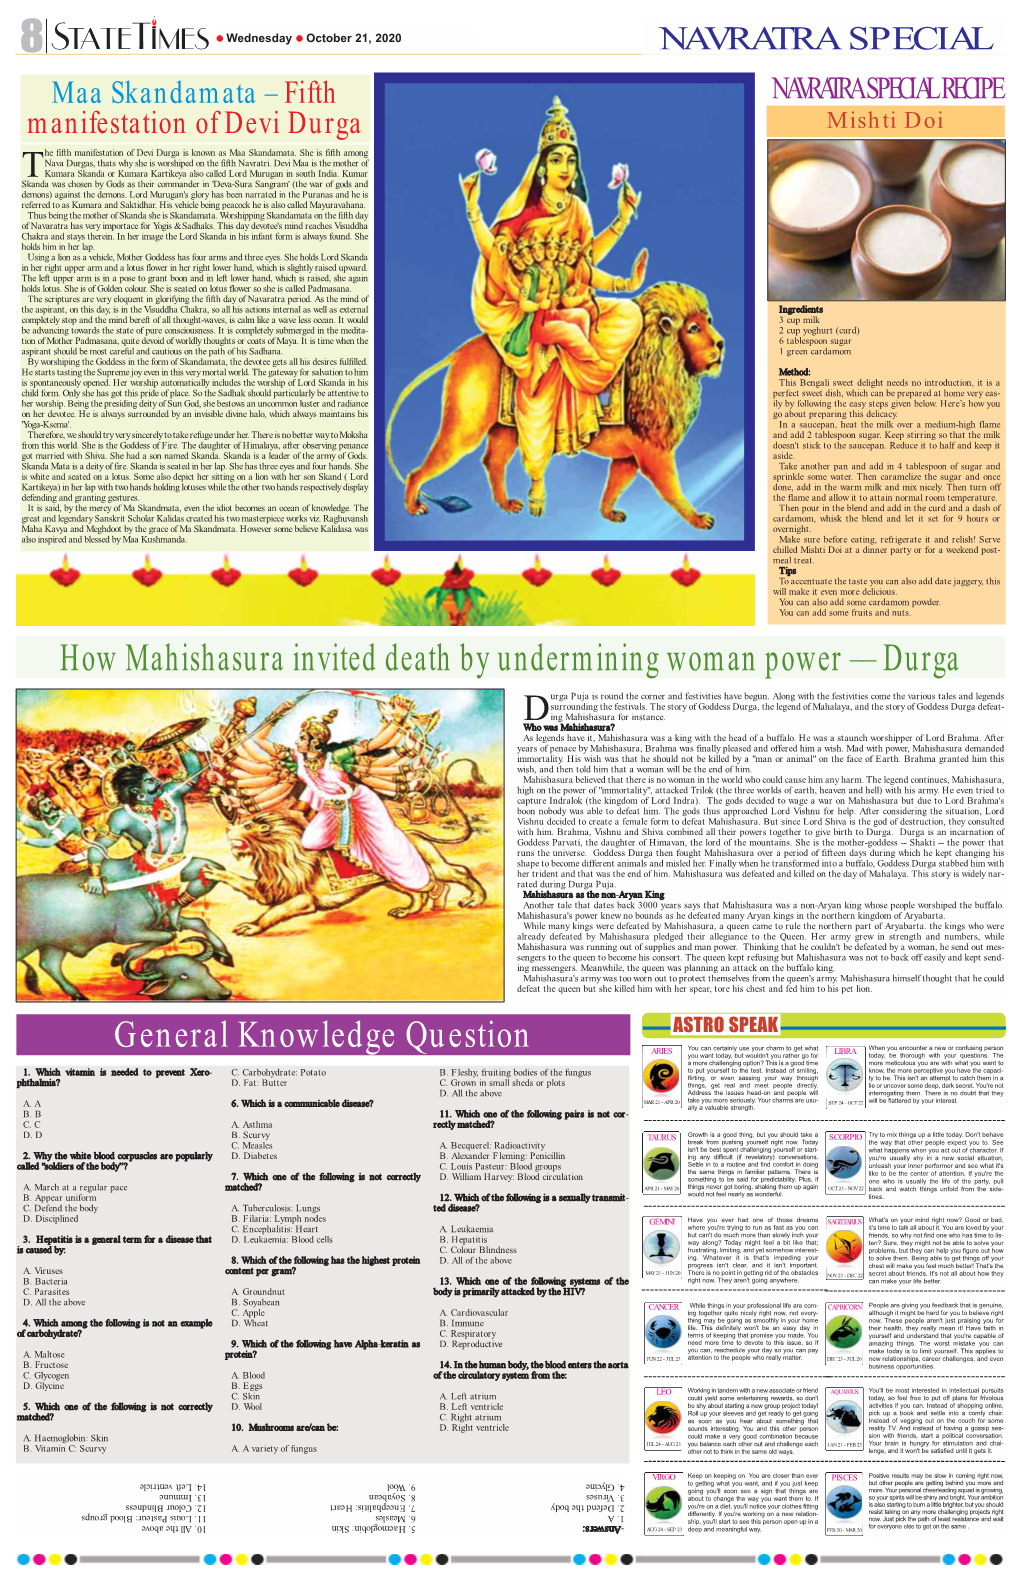 Durga Mishti Doi He Fifth Manifestation of Devi Durga Is Known As Maa Skandamata